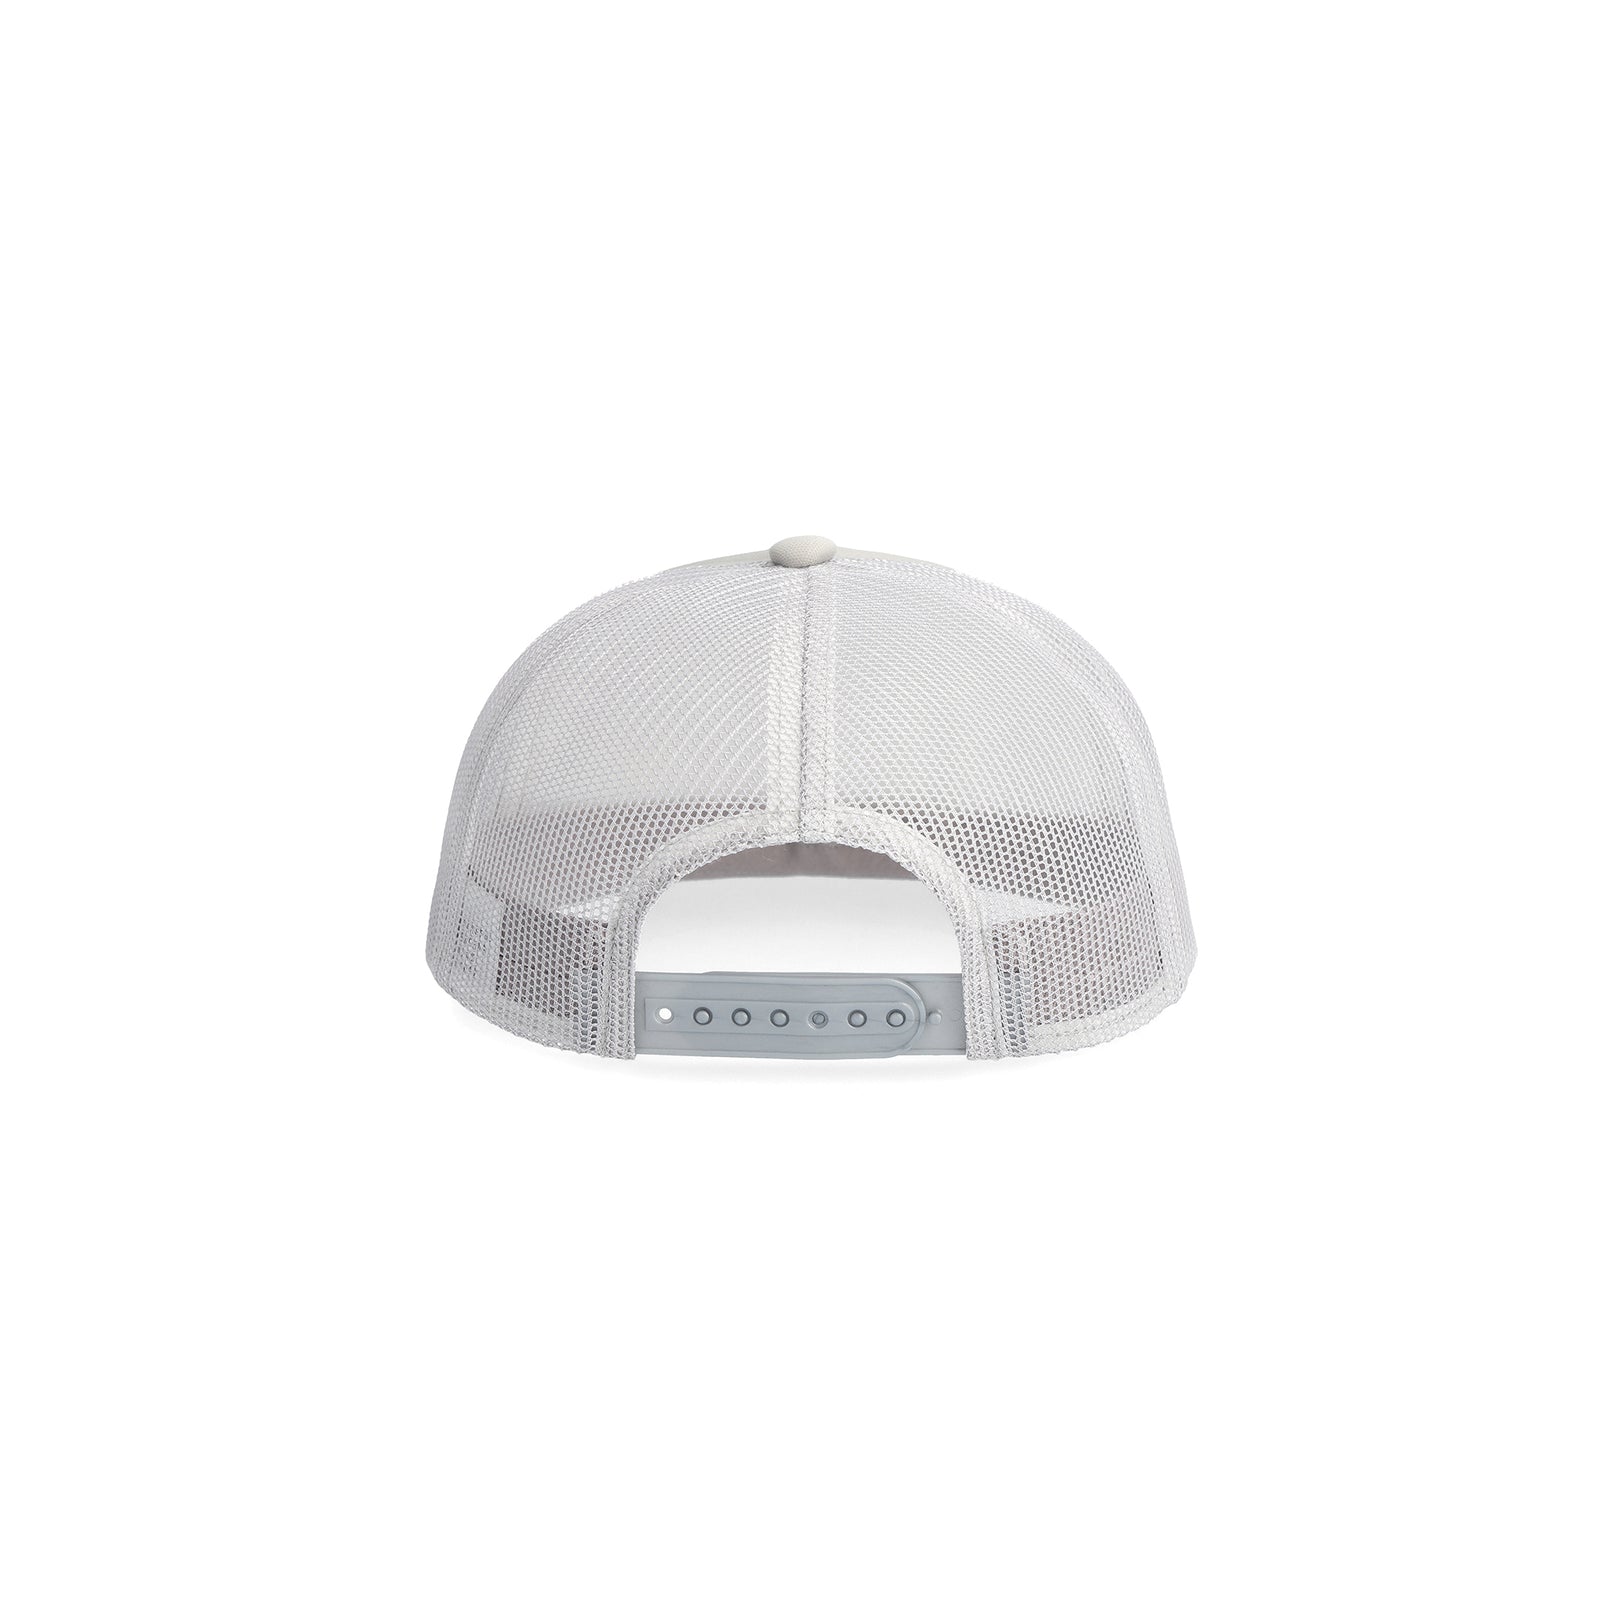 Back View of Topo Designs Foam Trucker Hat - Toposcape in "Light Gray"